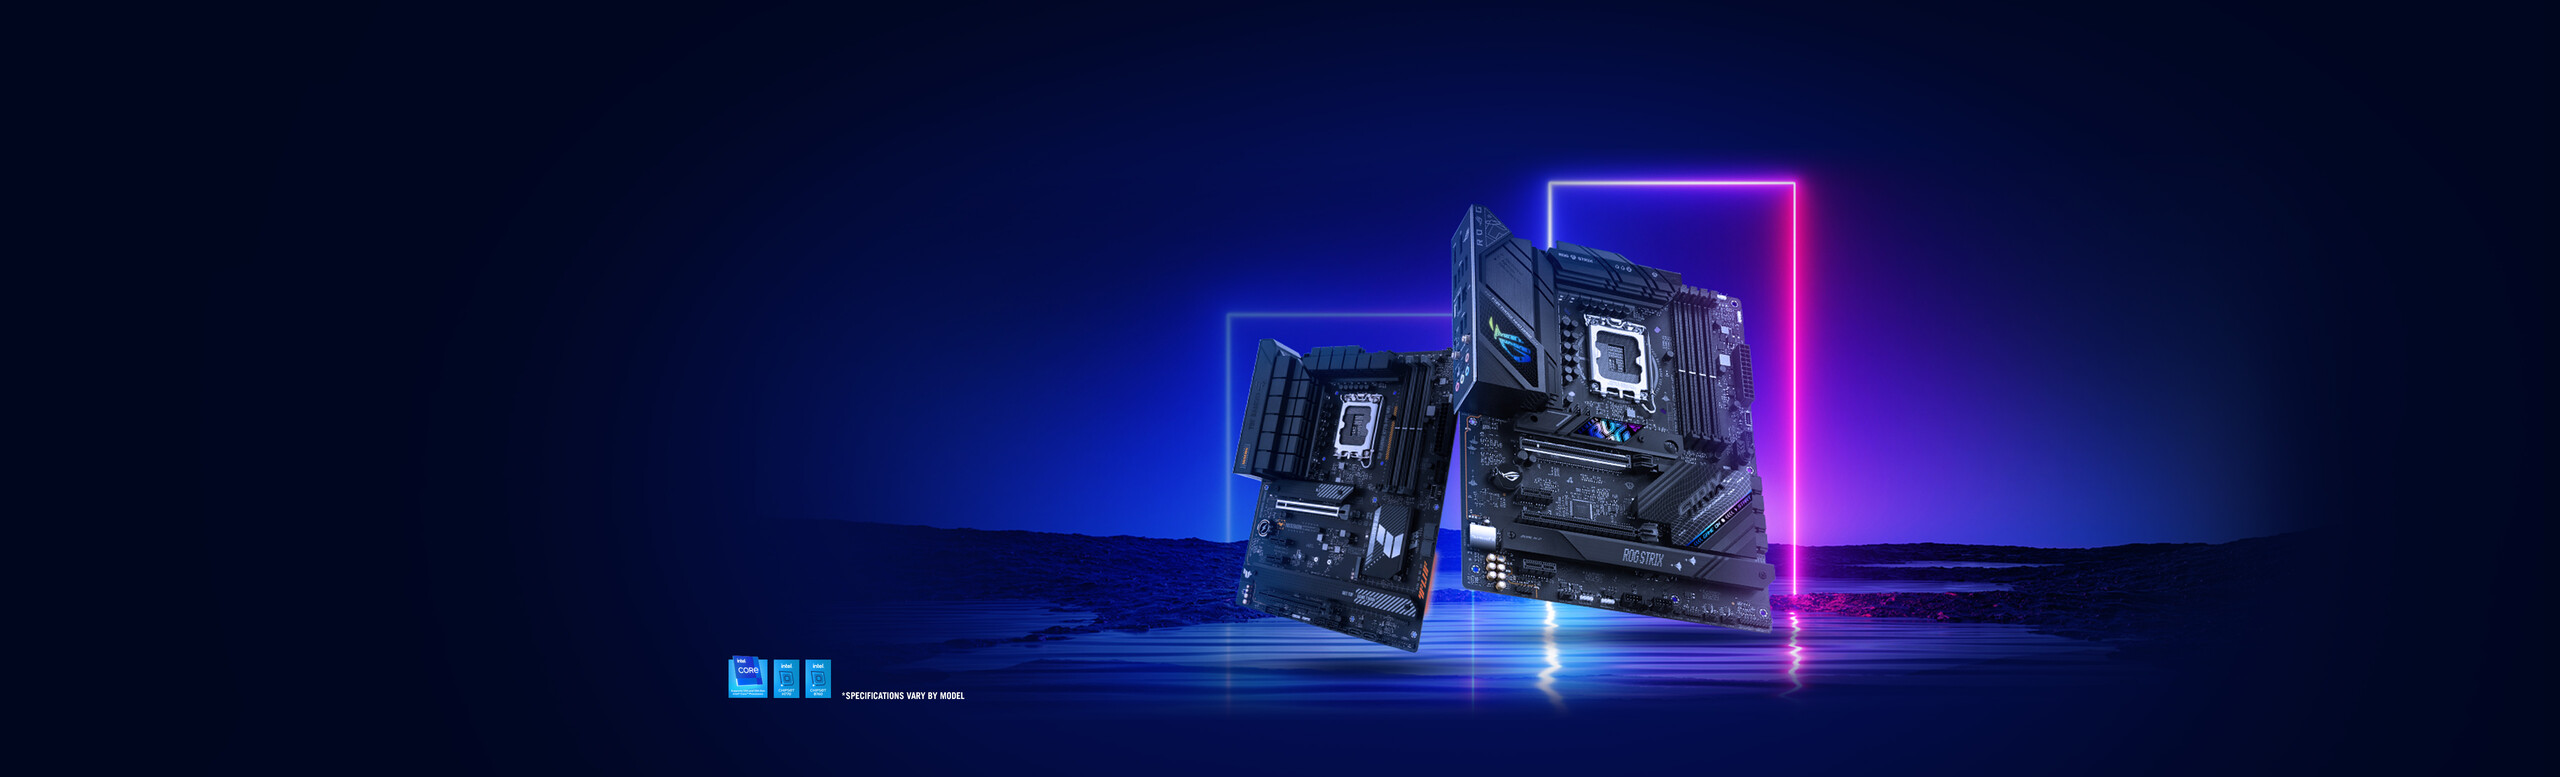 Intel H770 & B760 Motherboard Series Banner